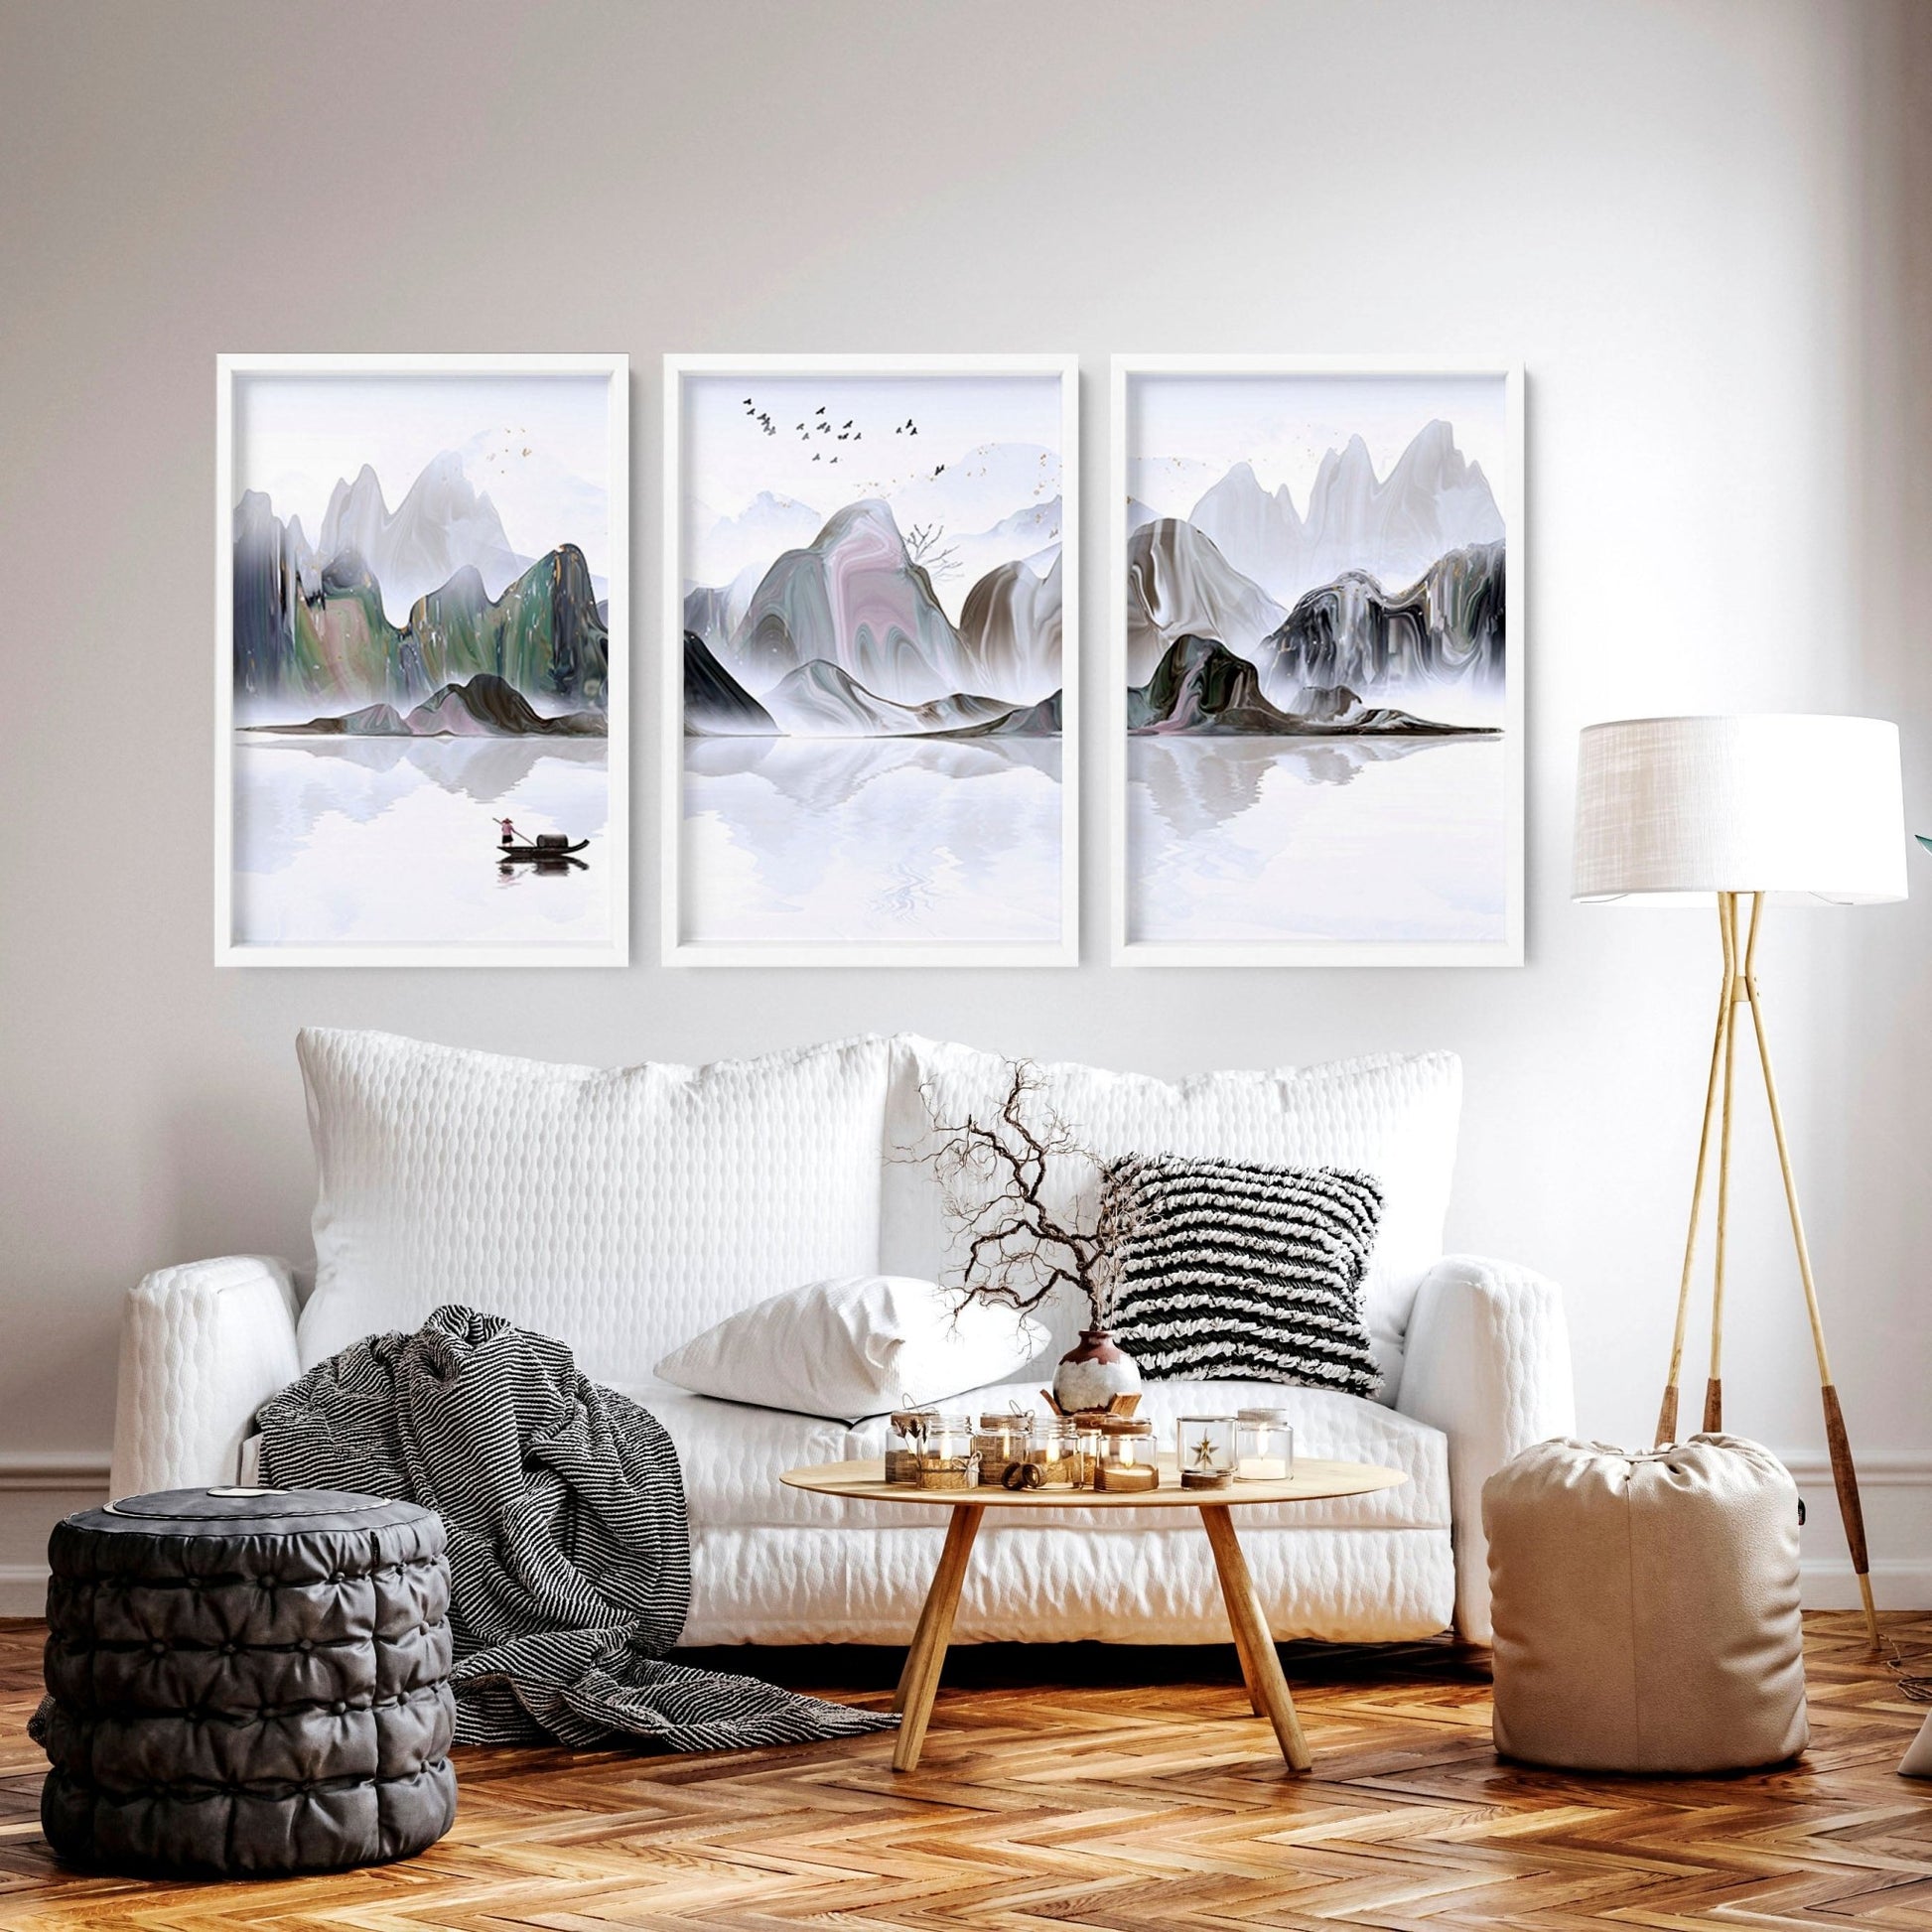 Calming Wall Art prints | set of 3 wall art prints - About Wall Art